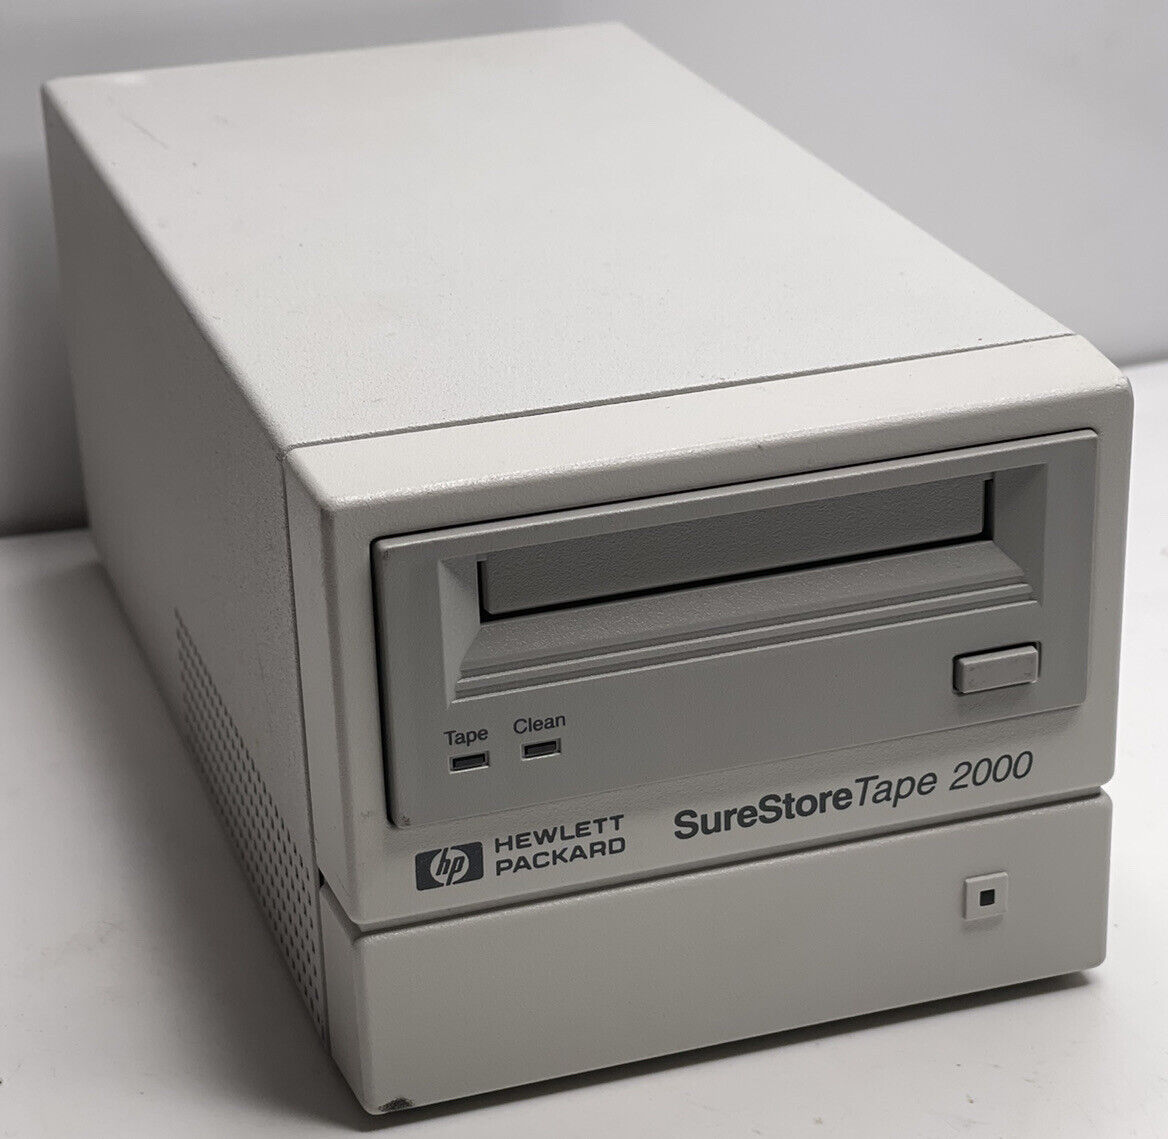 Hewlett Packard DAT Internal Drive  Sure Store Tape 2000